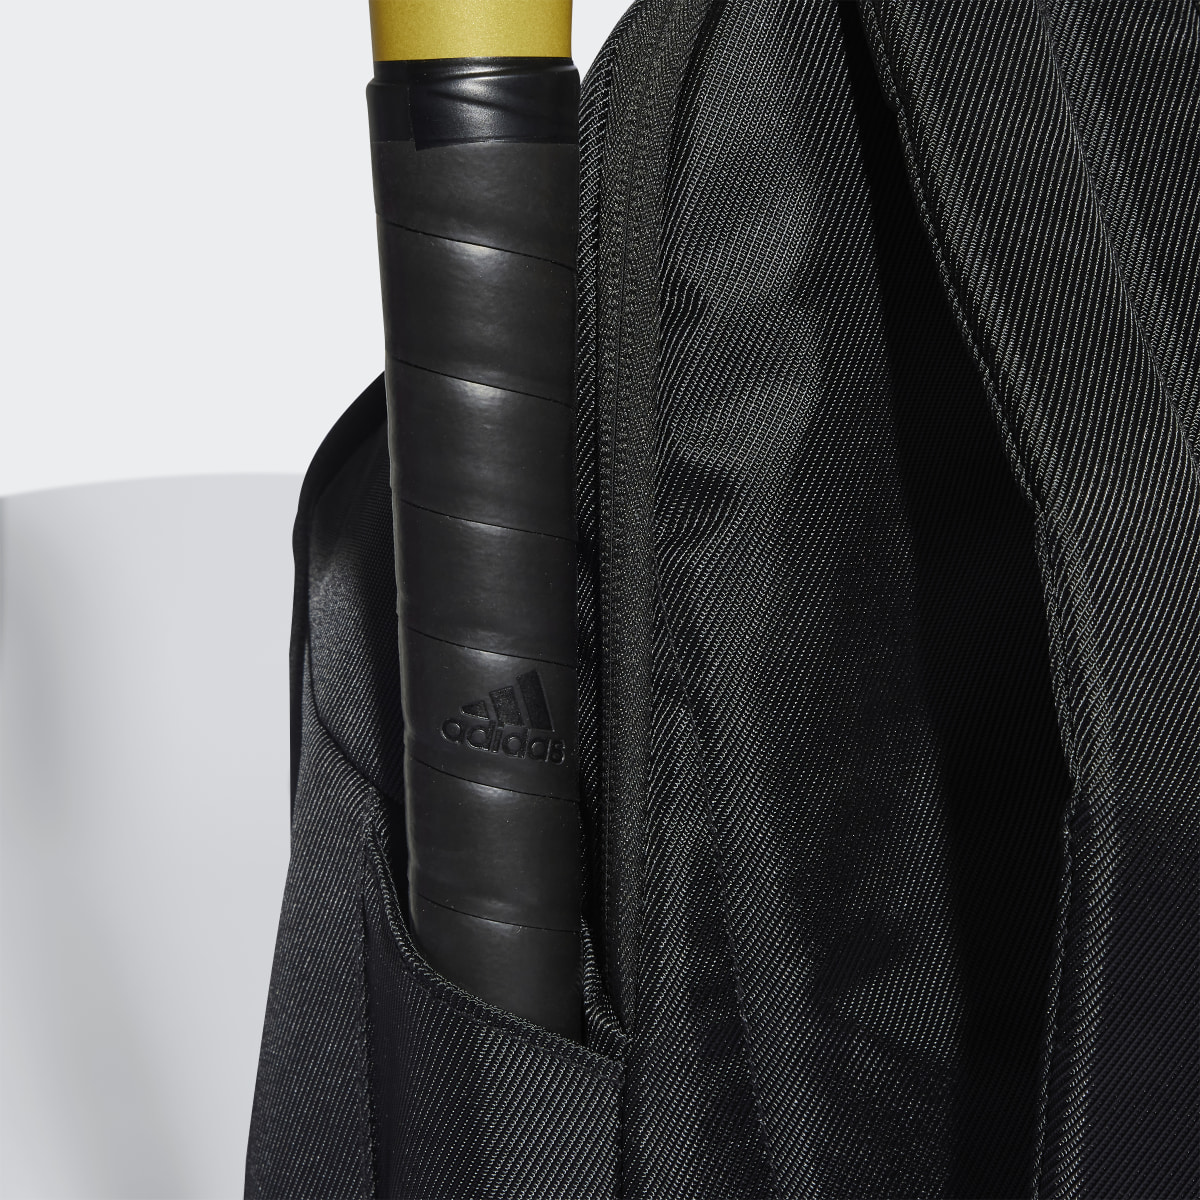 Adidas VS.6 Black/Gold Backpack. 7